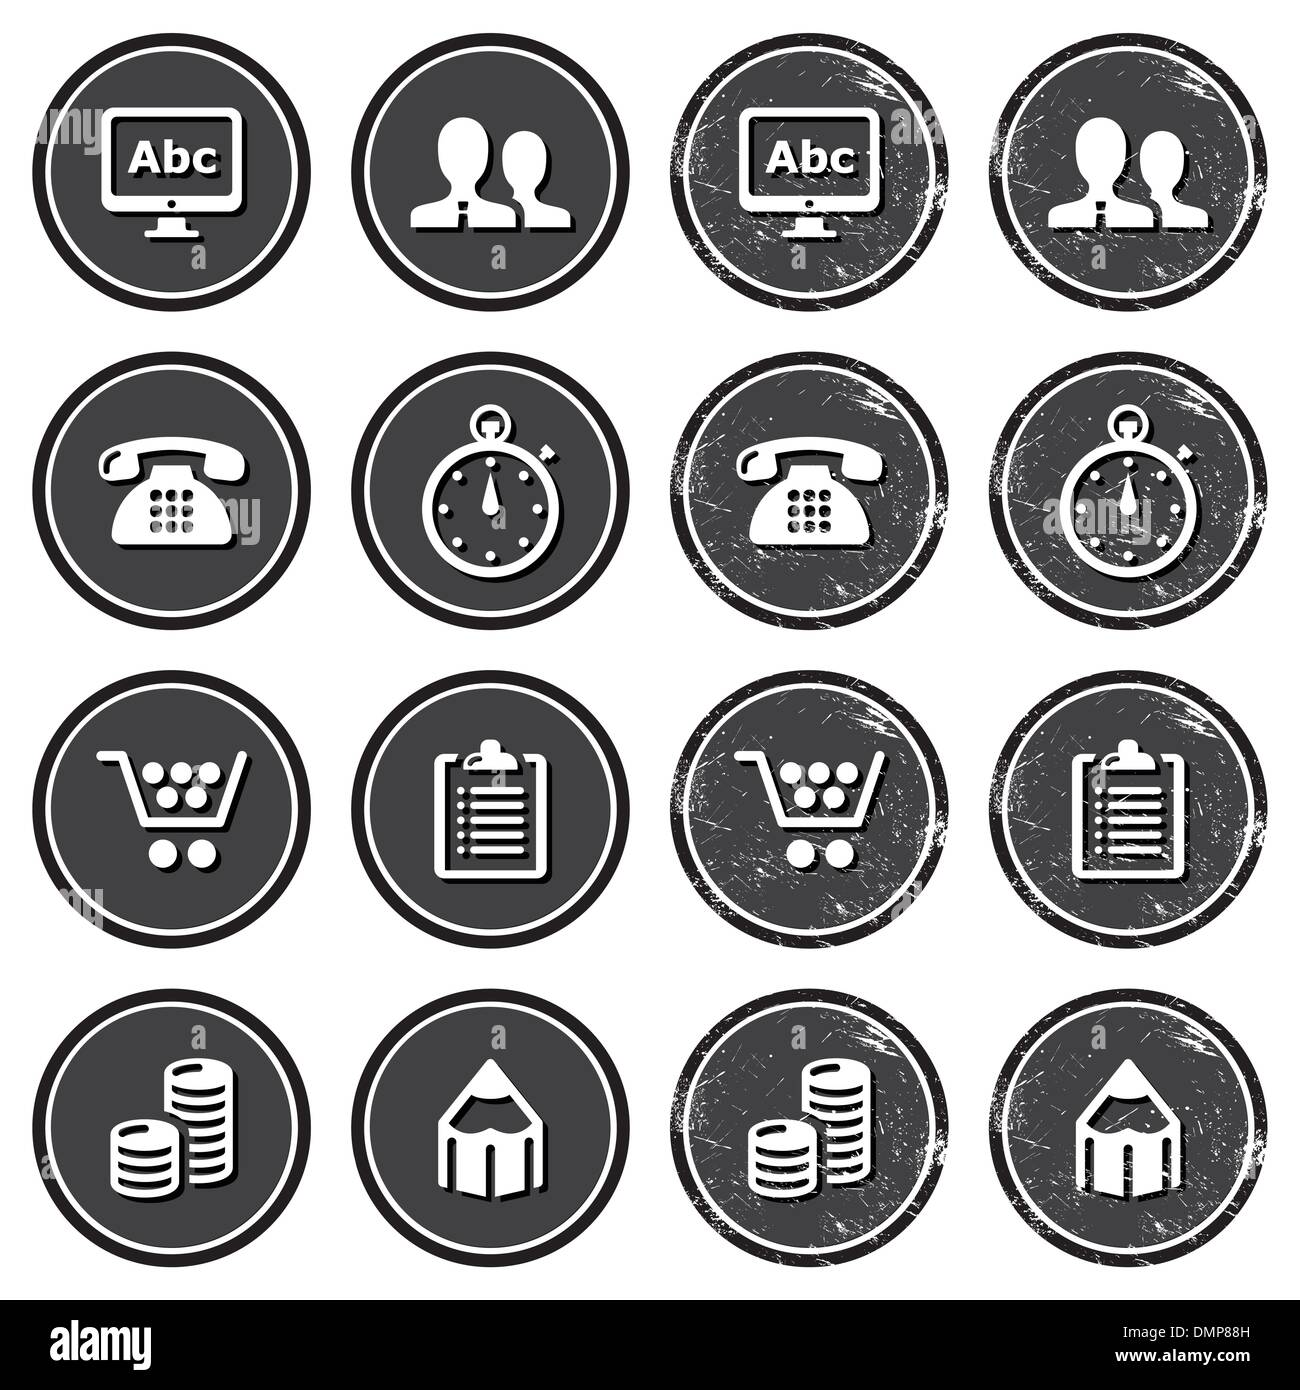 Website navigation icons on retro labels set Stock Vector